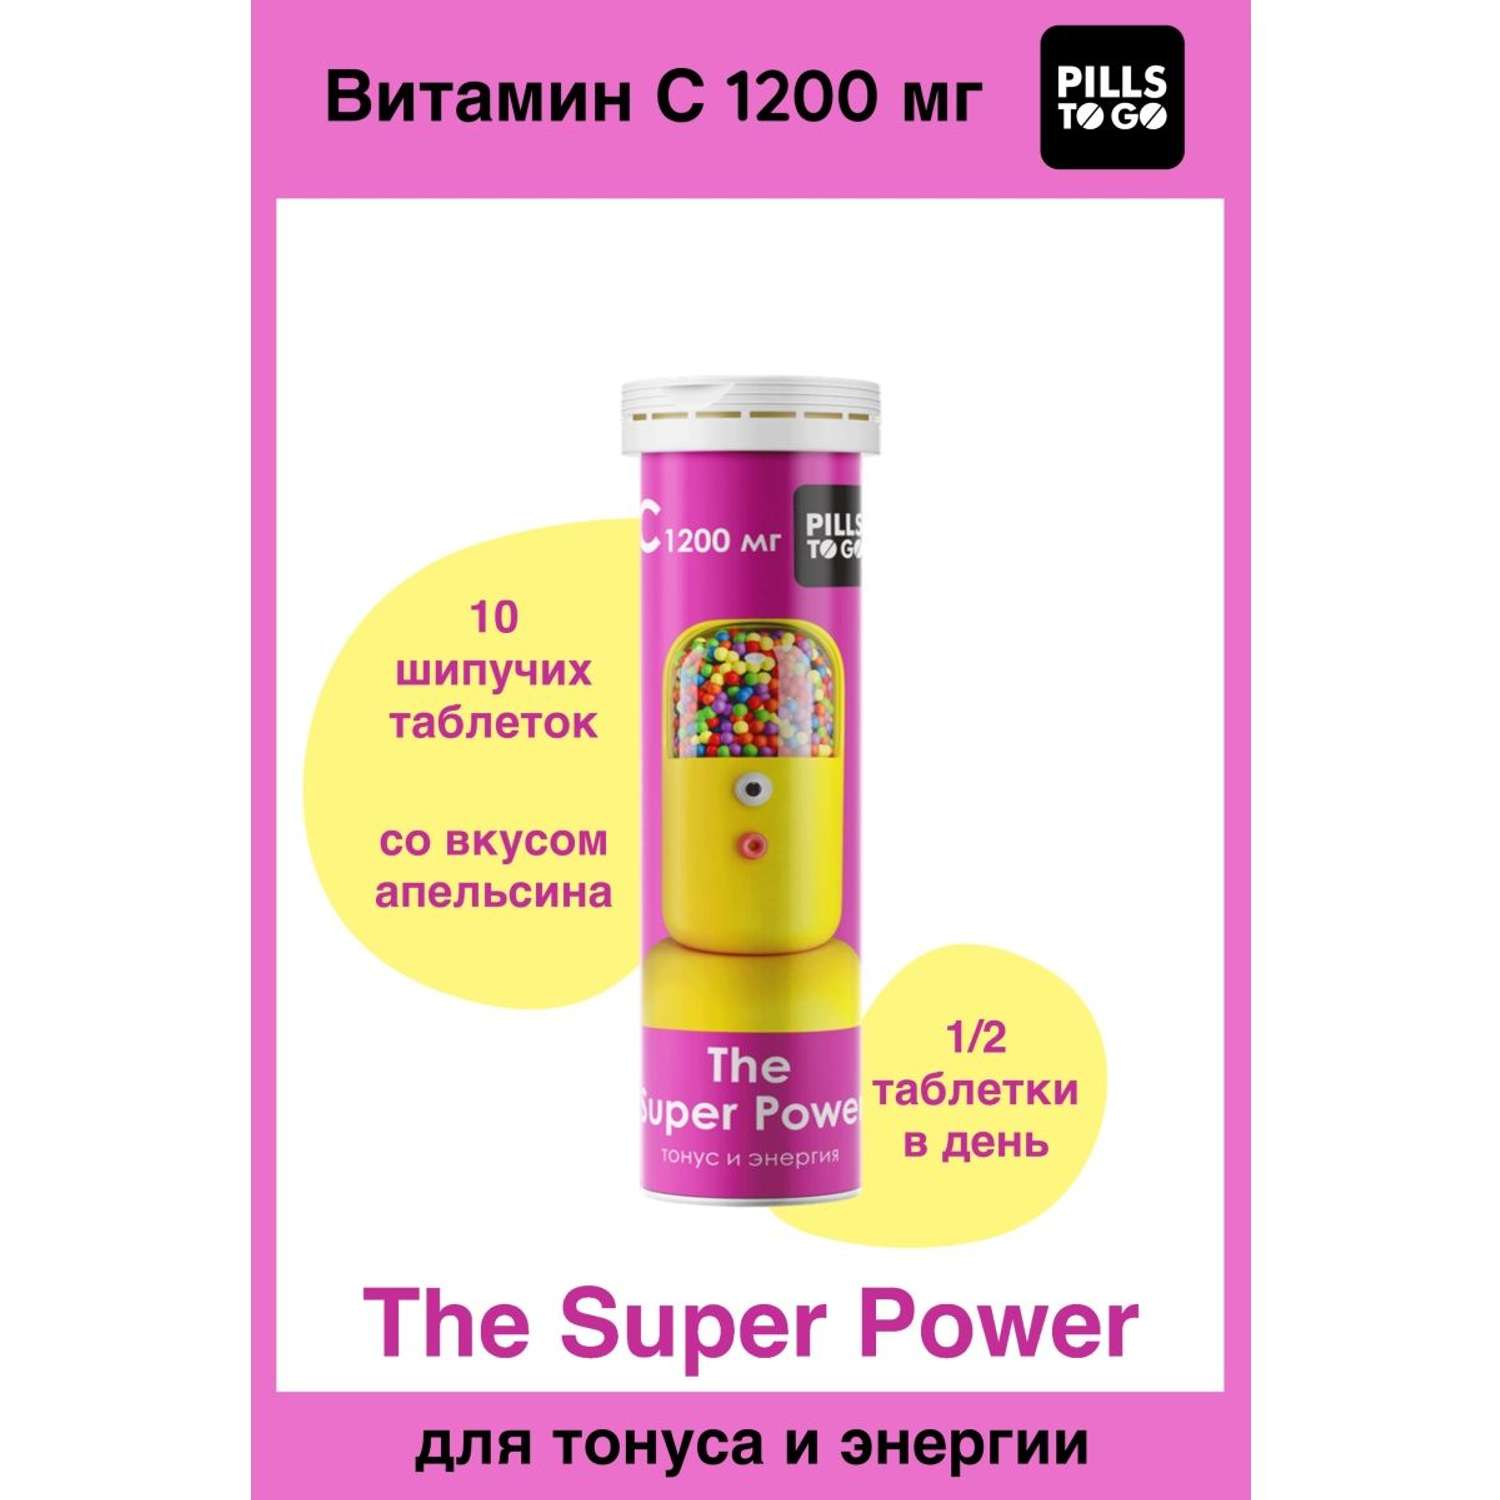 Комплекс PILLS TO GO для тонуса и энергии The Super Power Витамин C 1200 мг 10 шипучих таблеток - фото 1